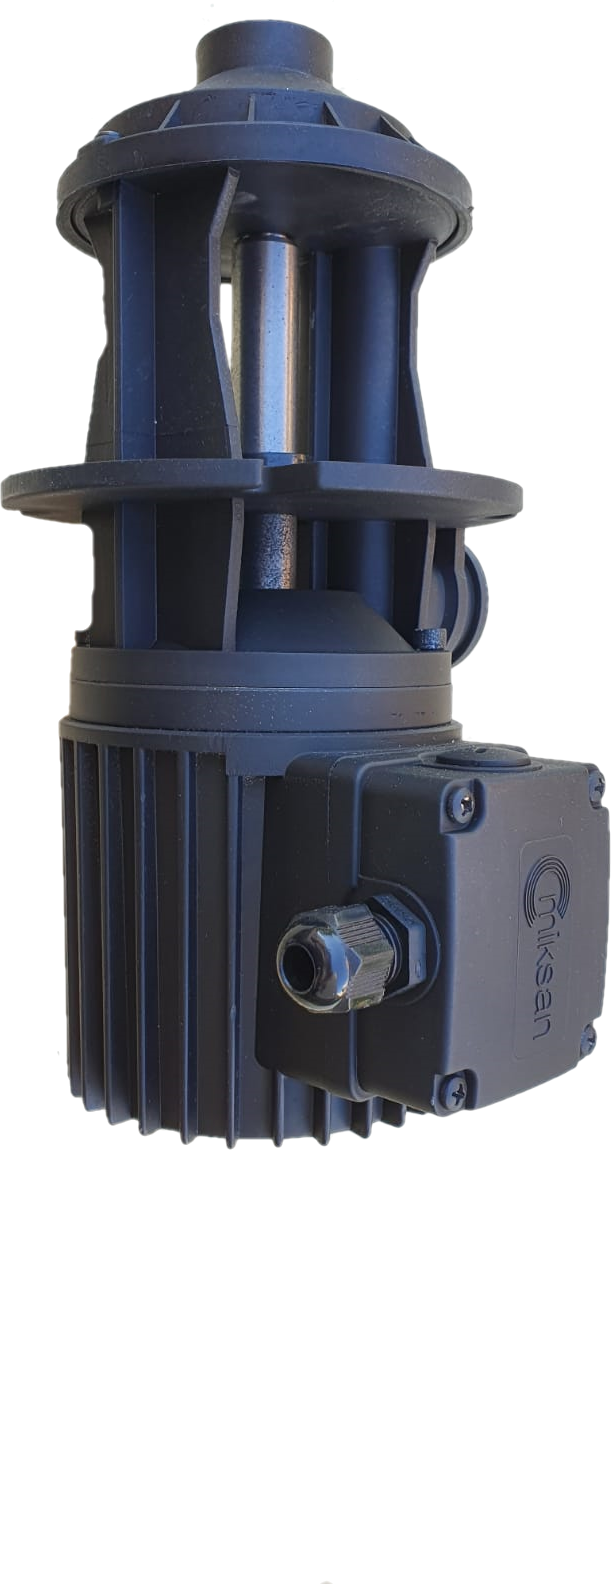 Kühlmittelpumpe Eintauchpumpe Schmiermittelpumpe 400V Förderhöhe 3,5m - 8m  (Colp 1-150T)